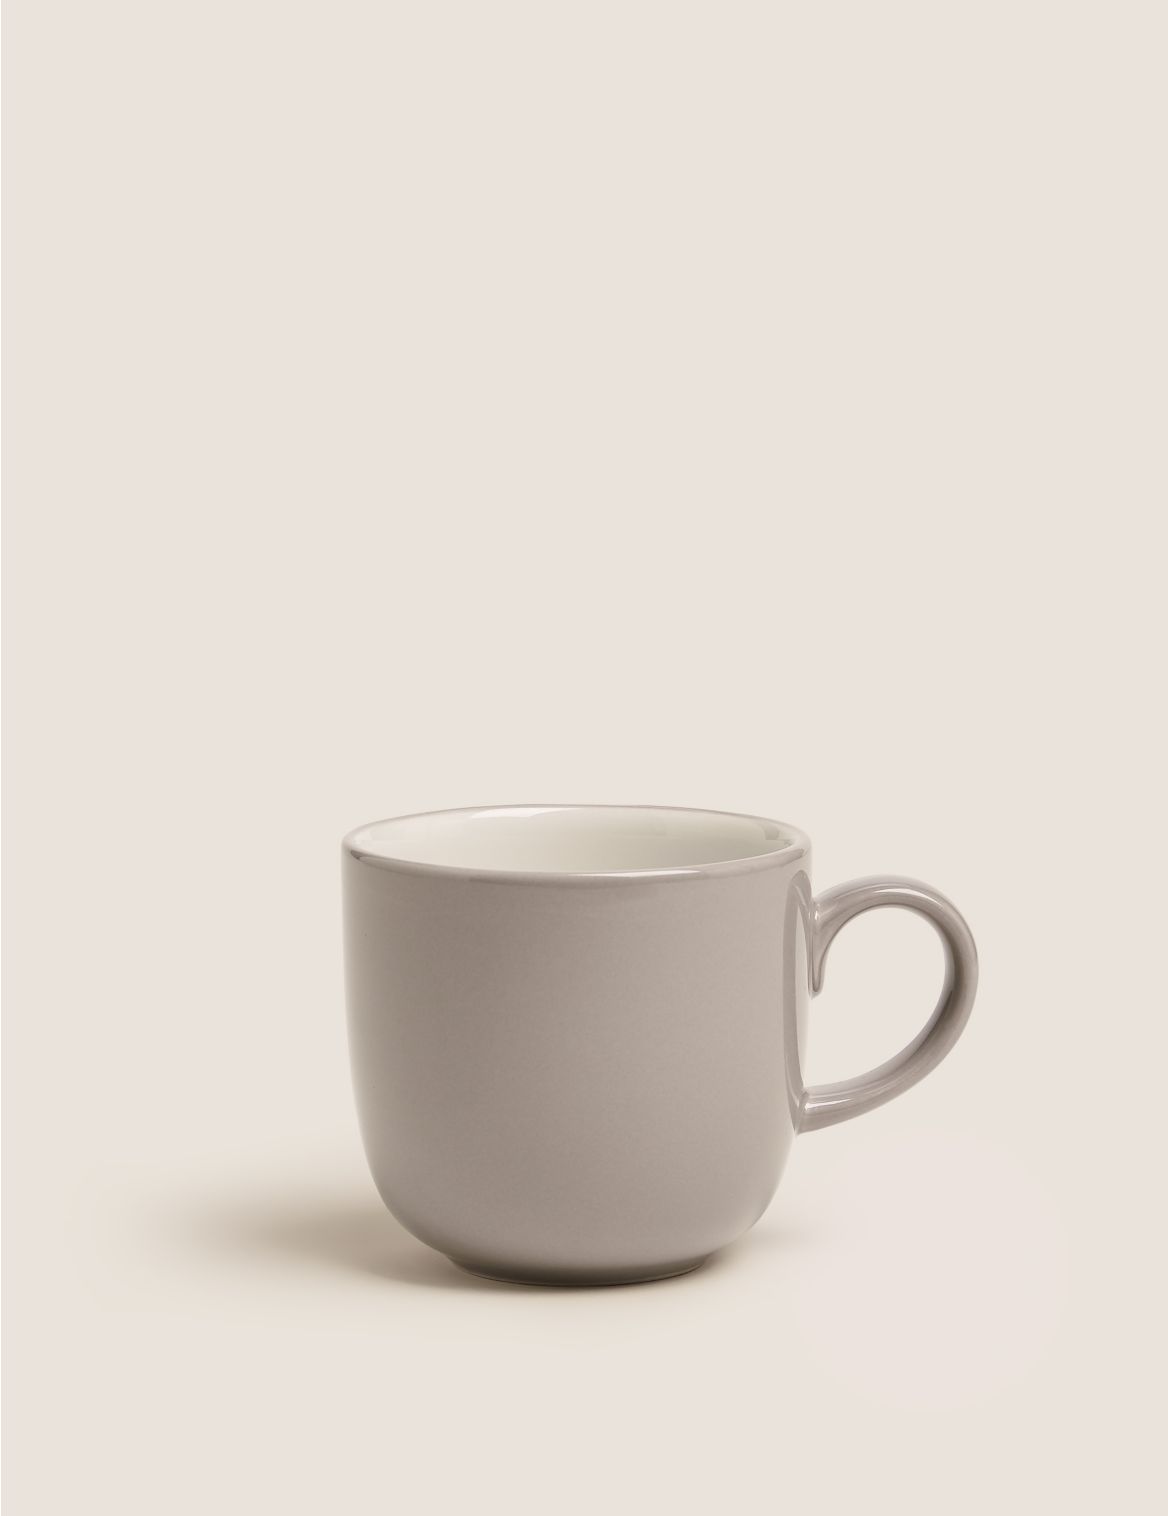 Image of Tribeca Small Mug grey